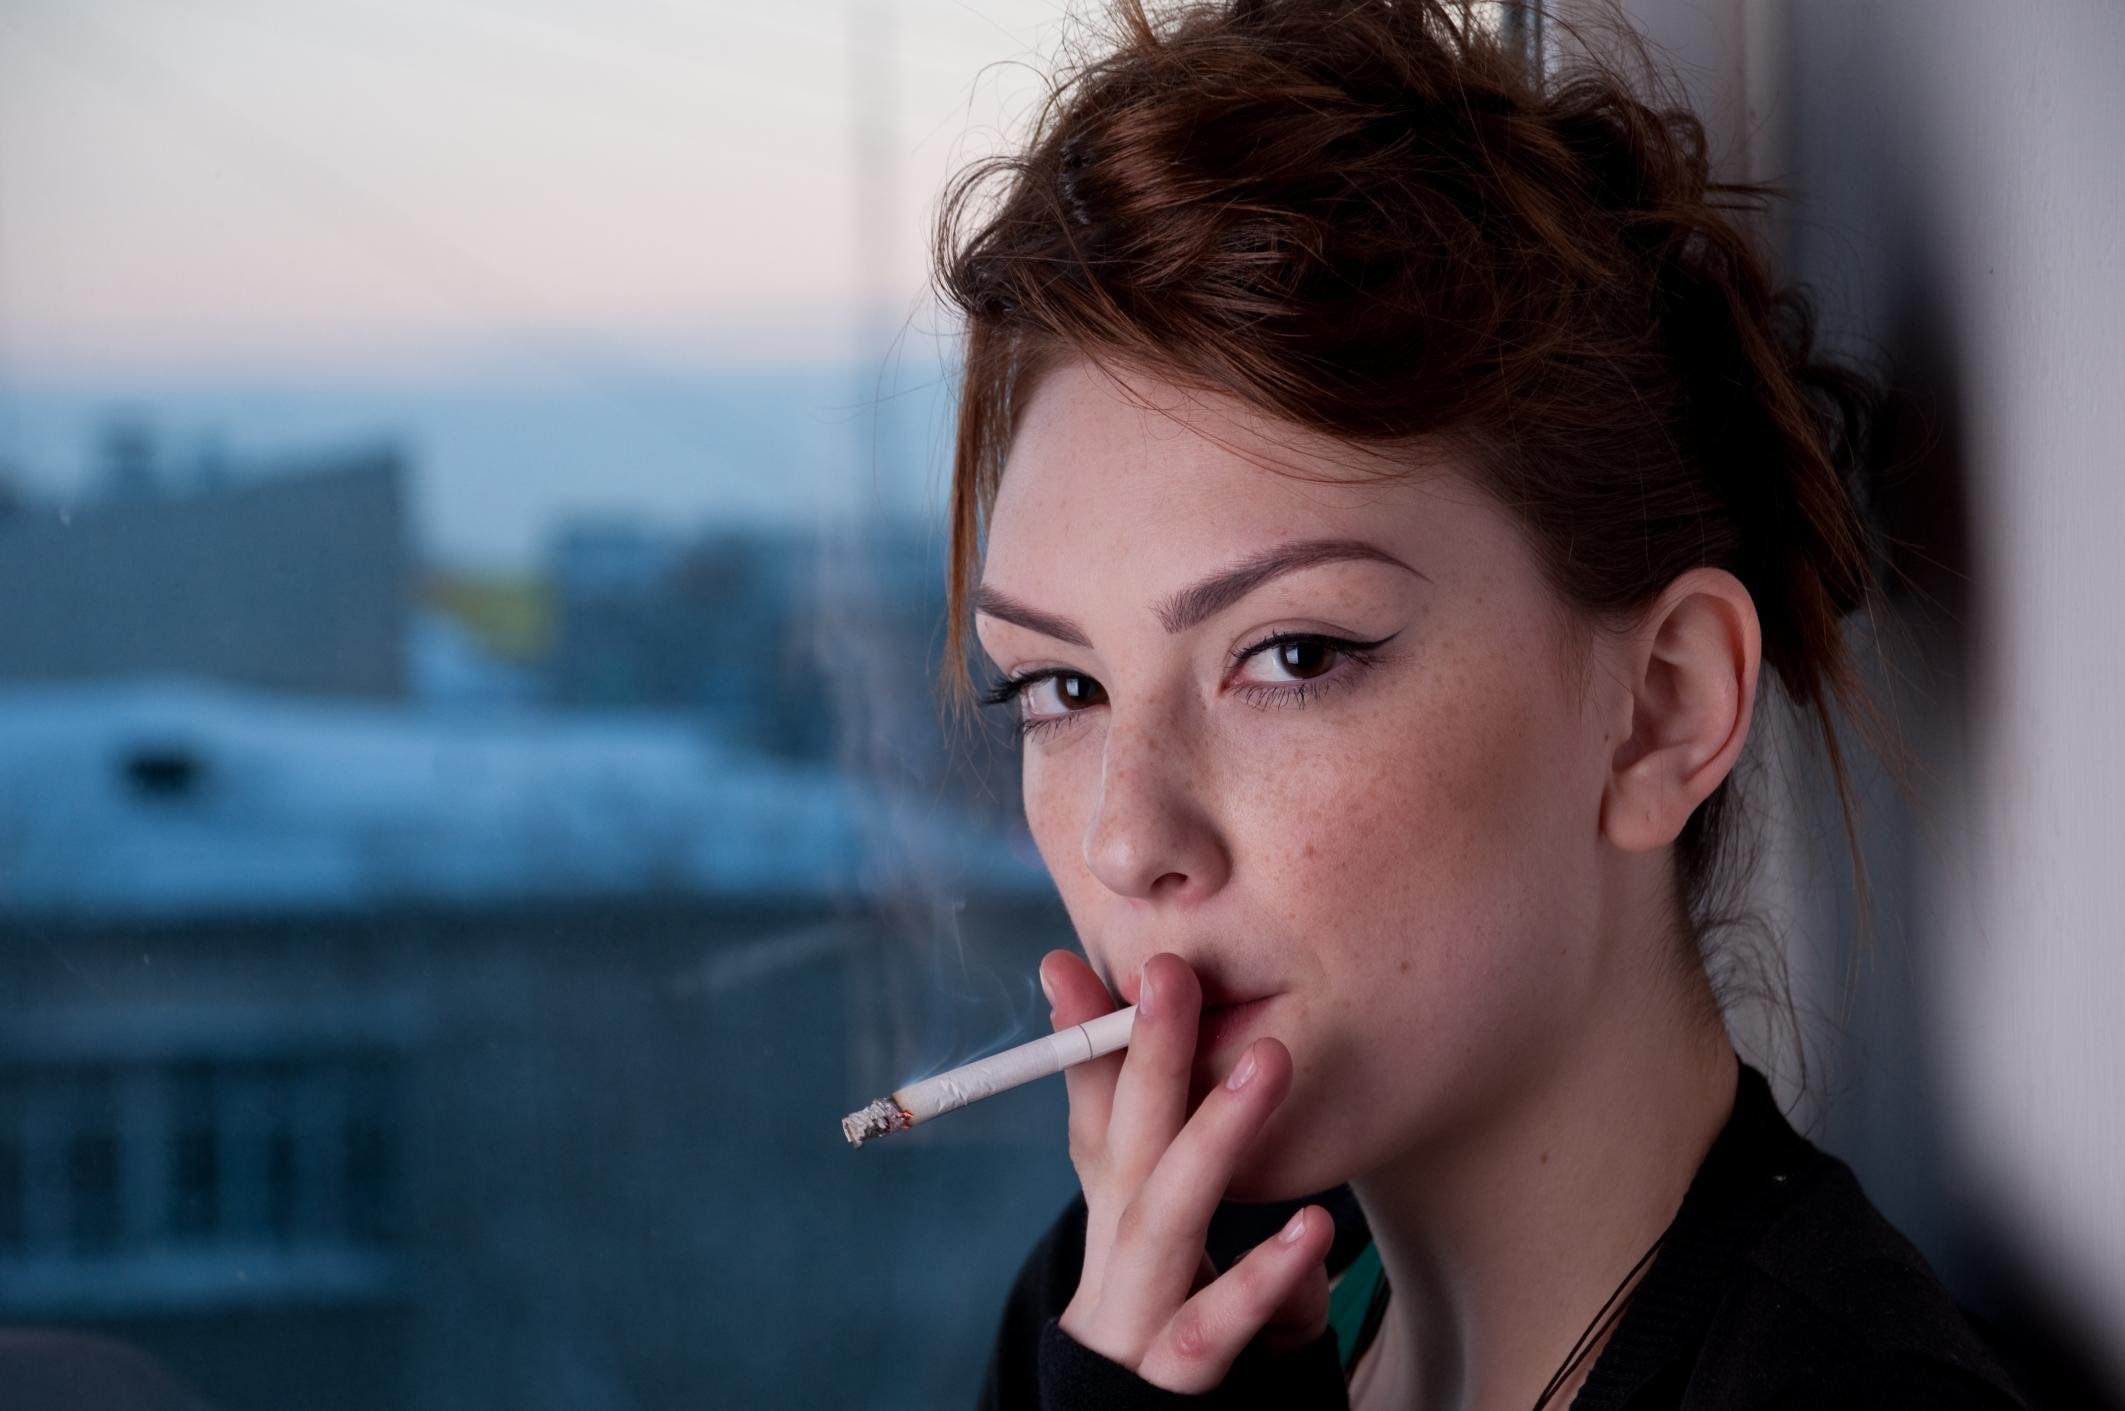 Sensual cigarette smoking